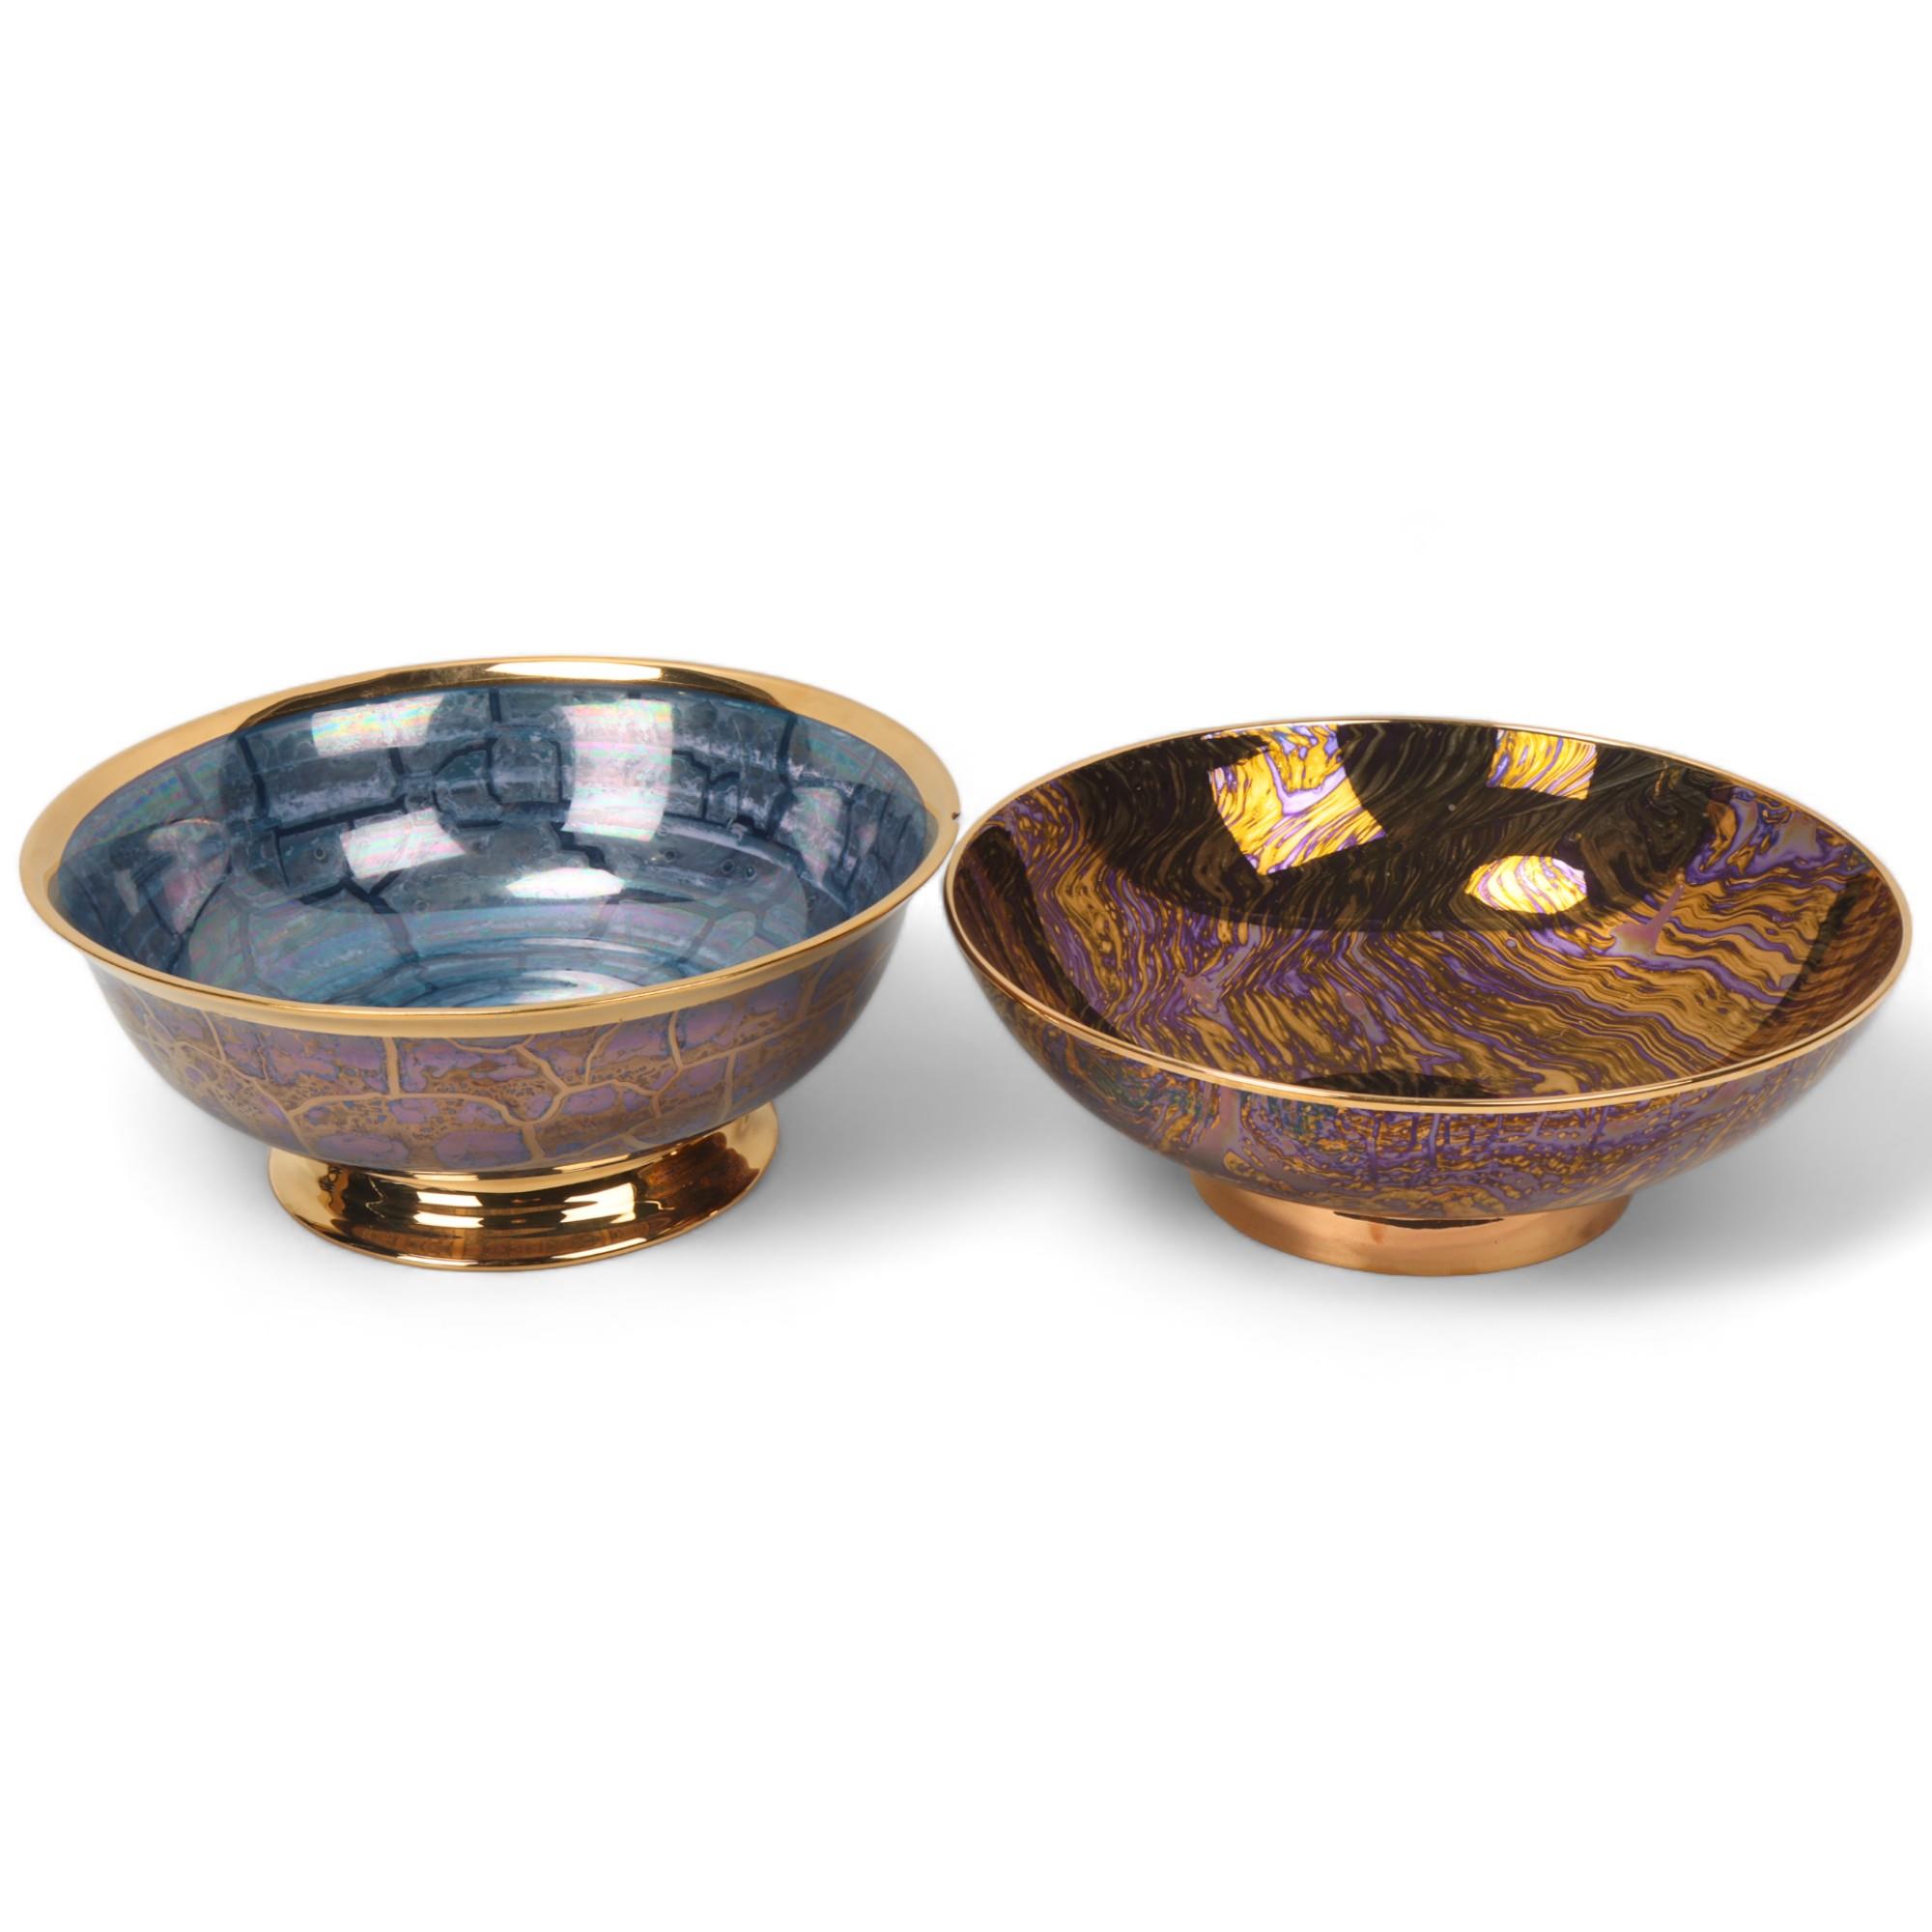 CAROLINE & STEPHEN ATKINSON-JONES, two slip-cast fruit bowls, with gold lustre glaze, signed to